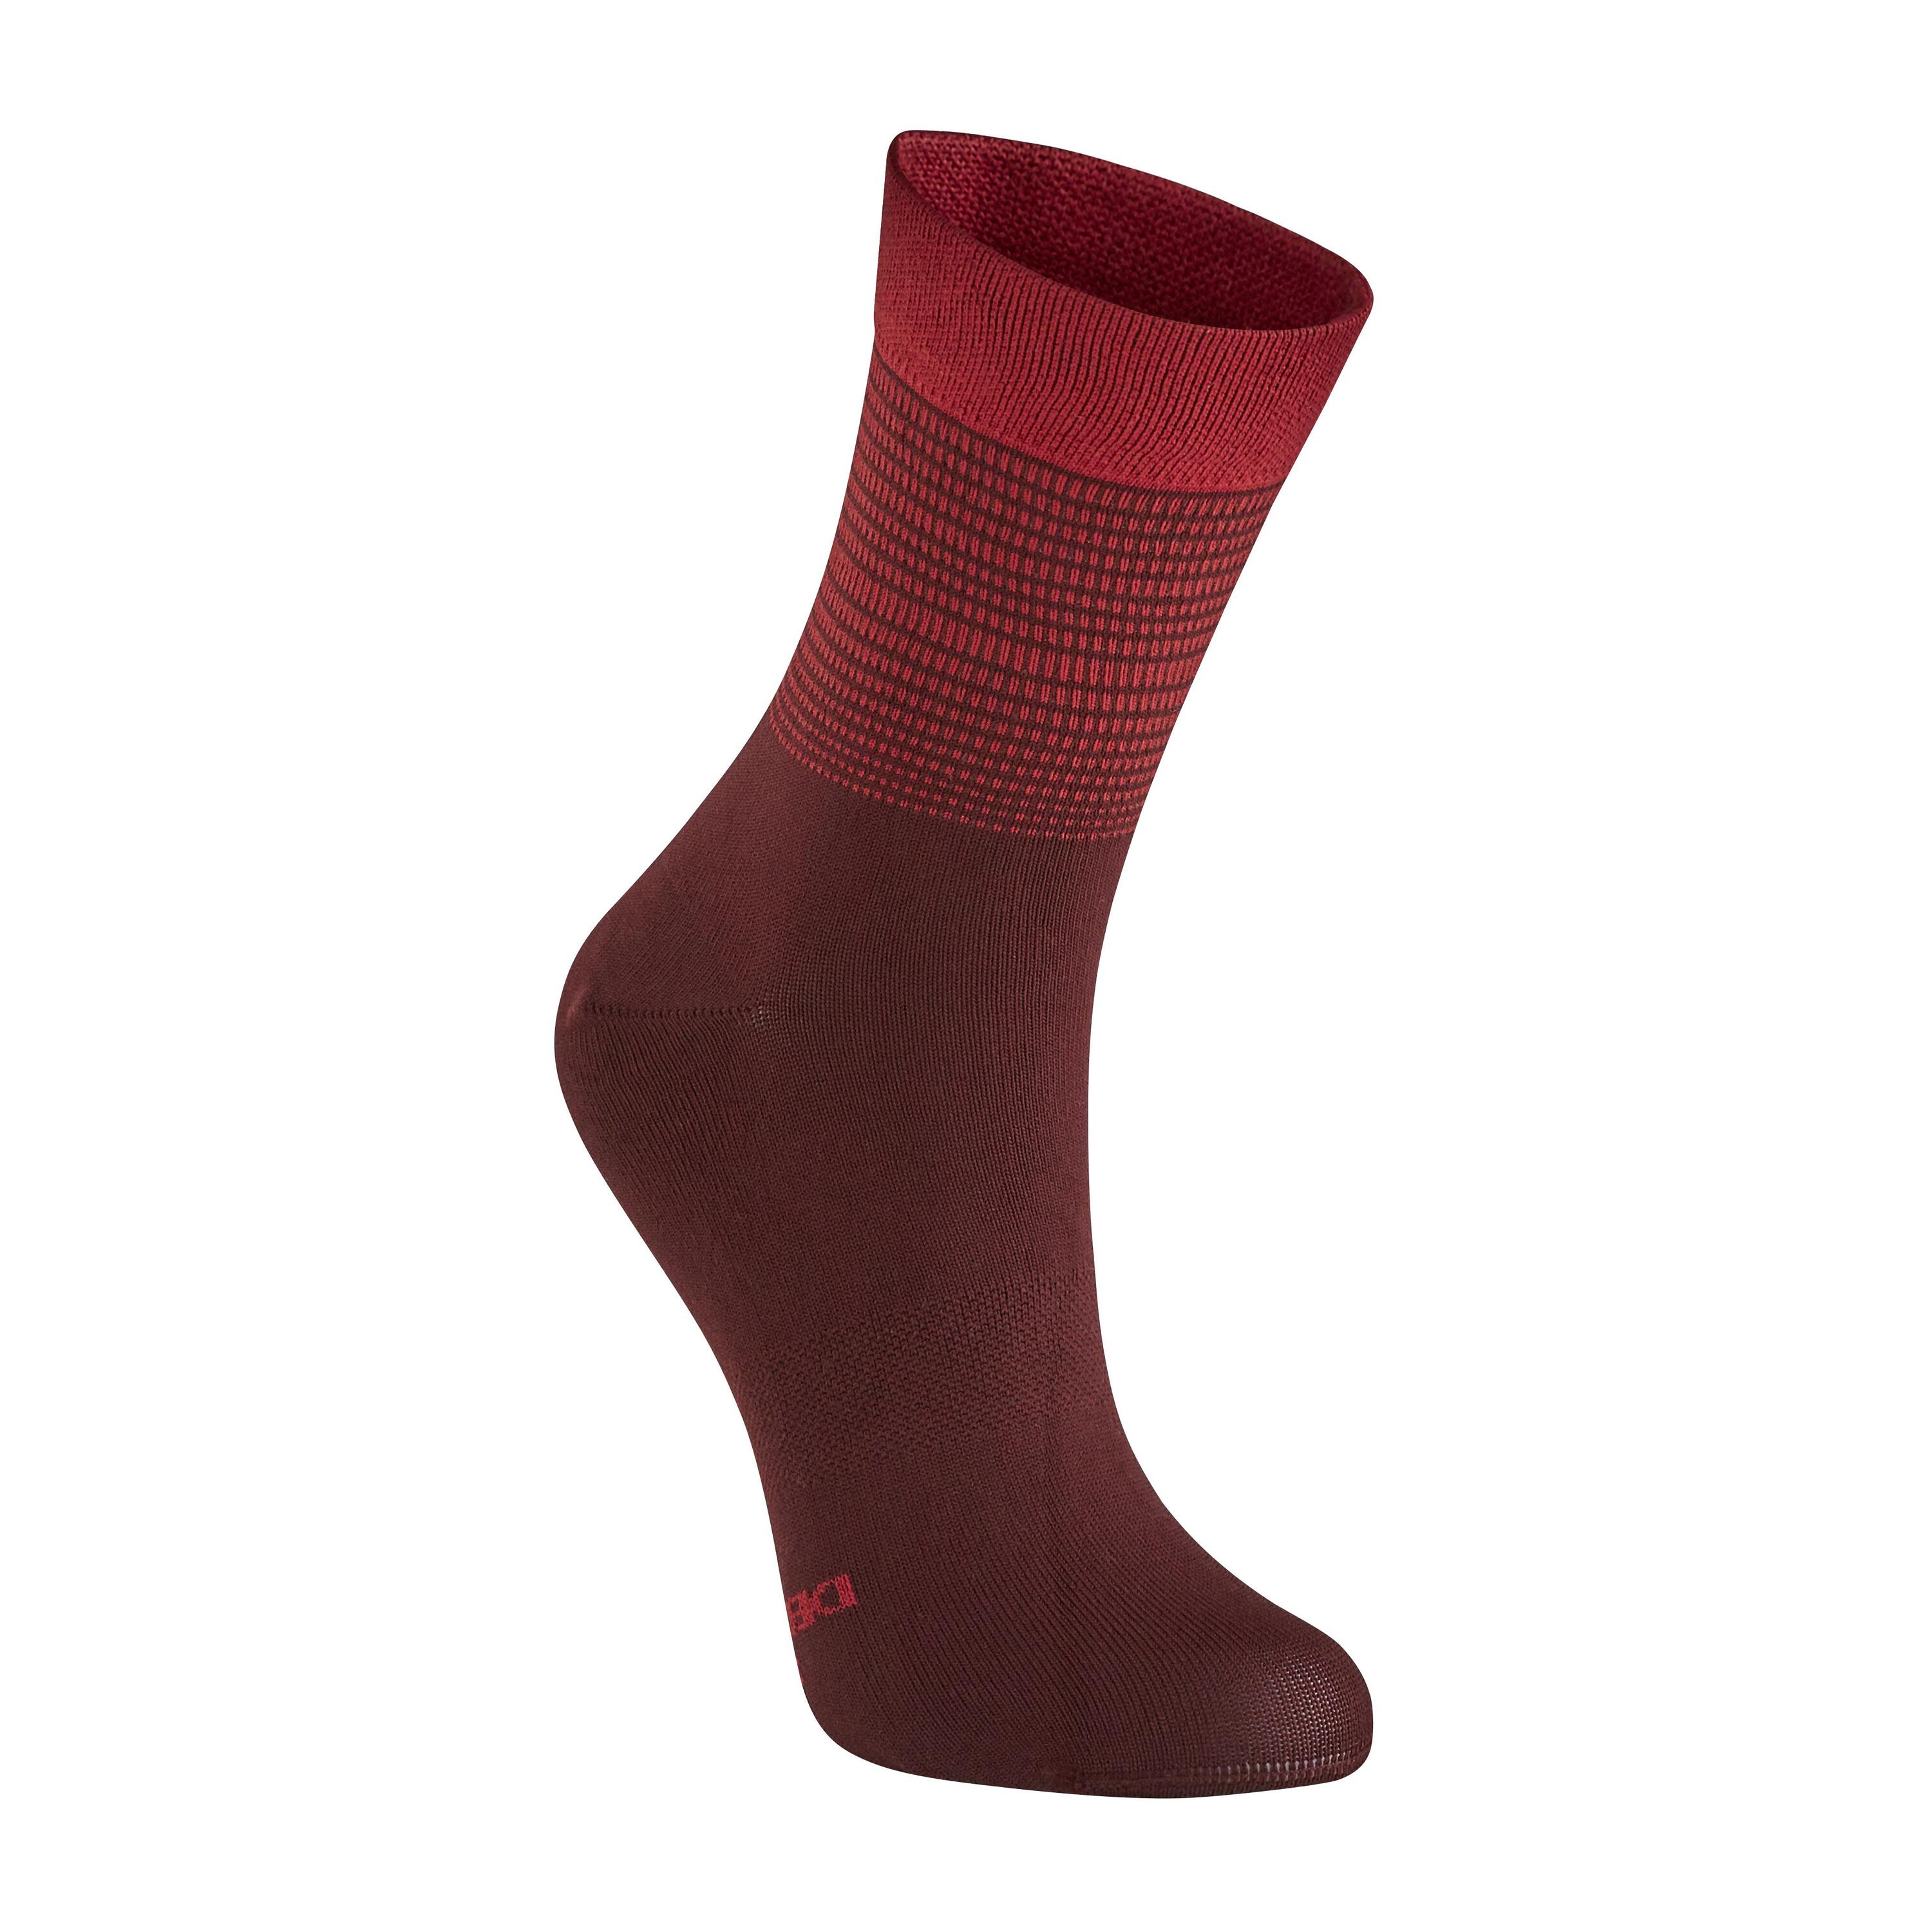 VAN RYSEL RoadR 520 Cycling Socks - Red